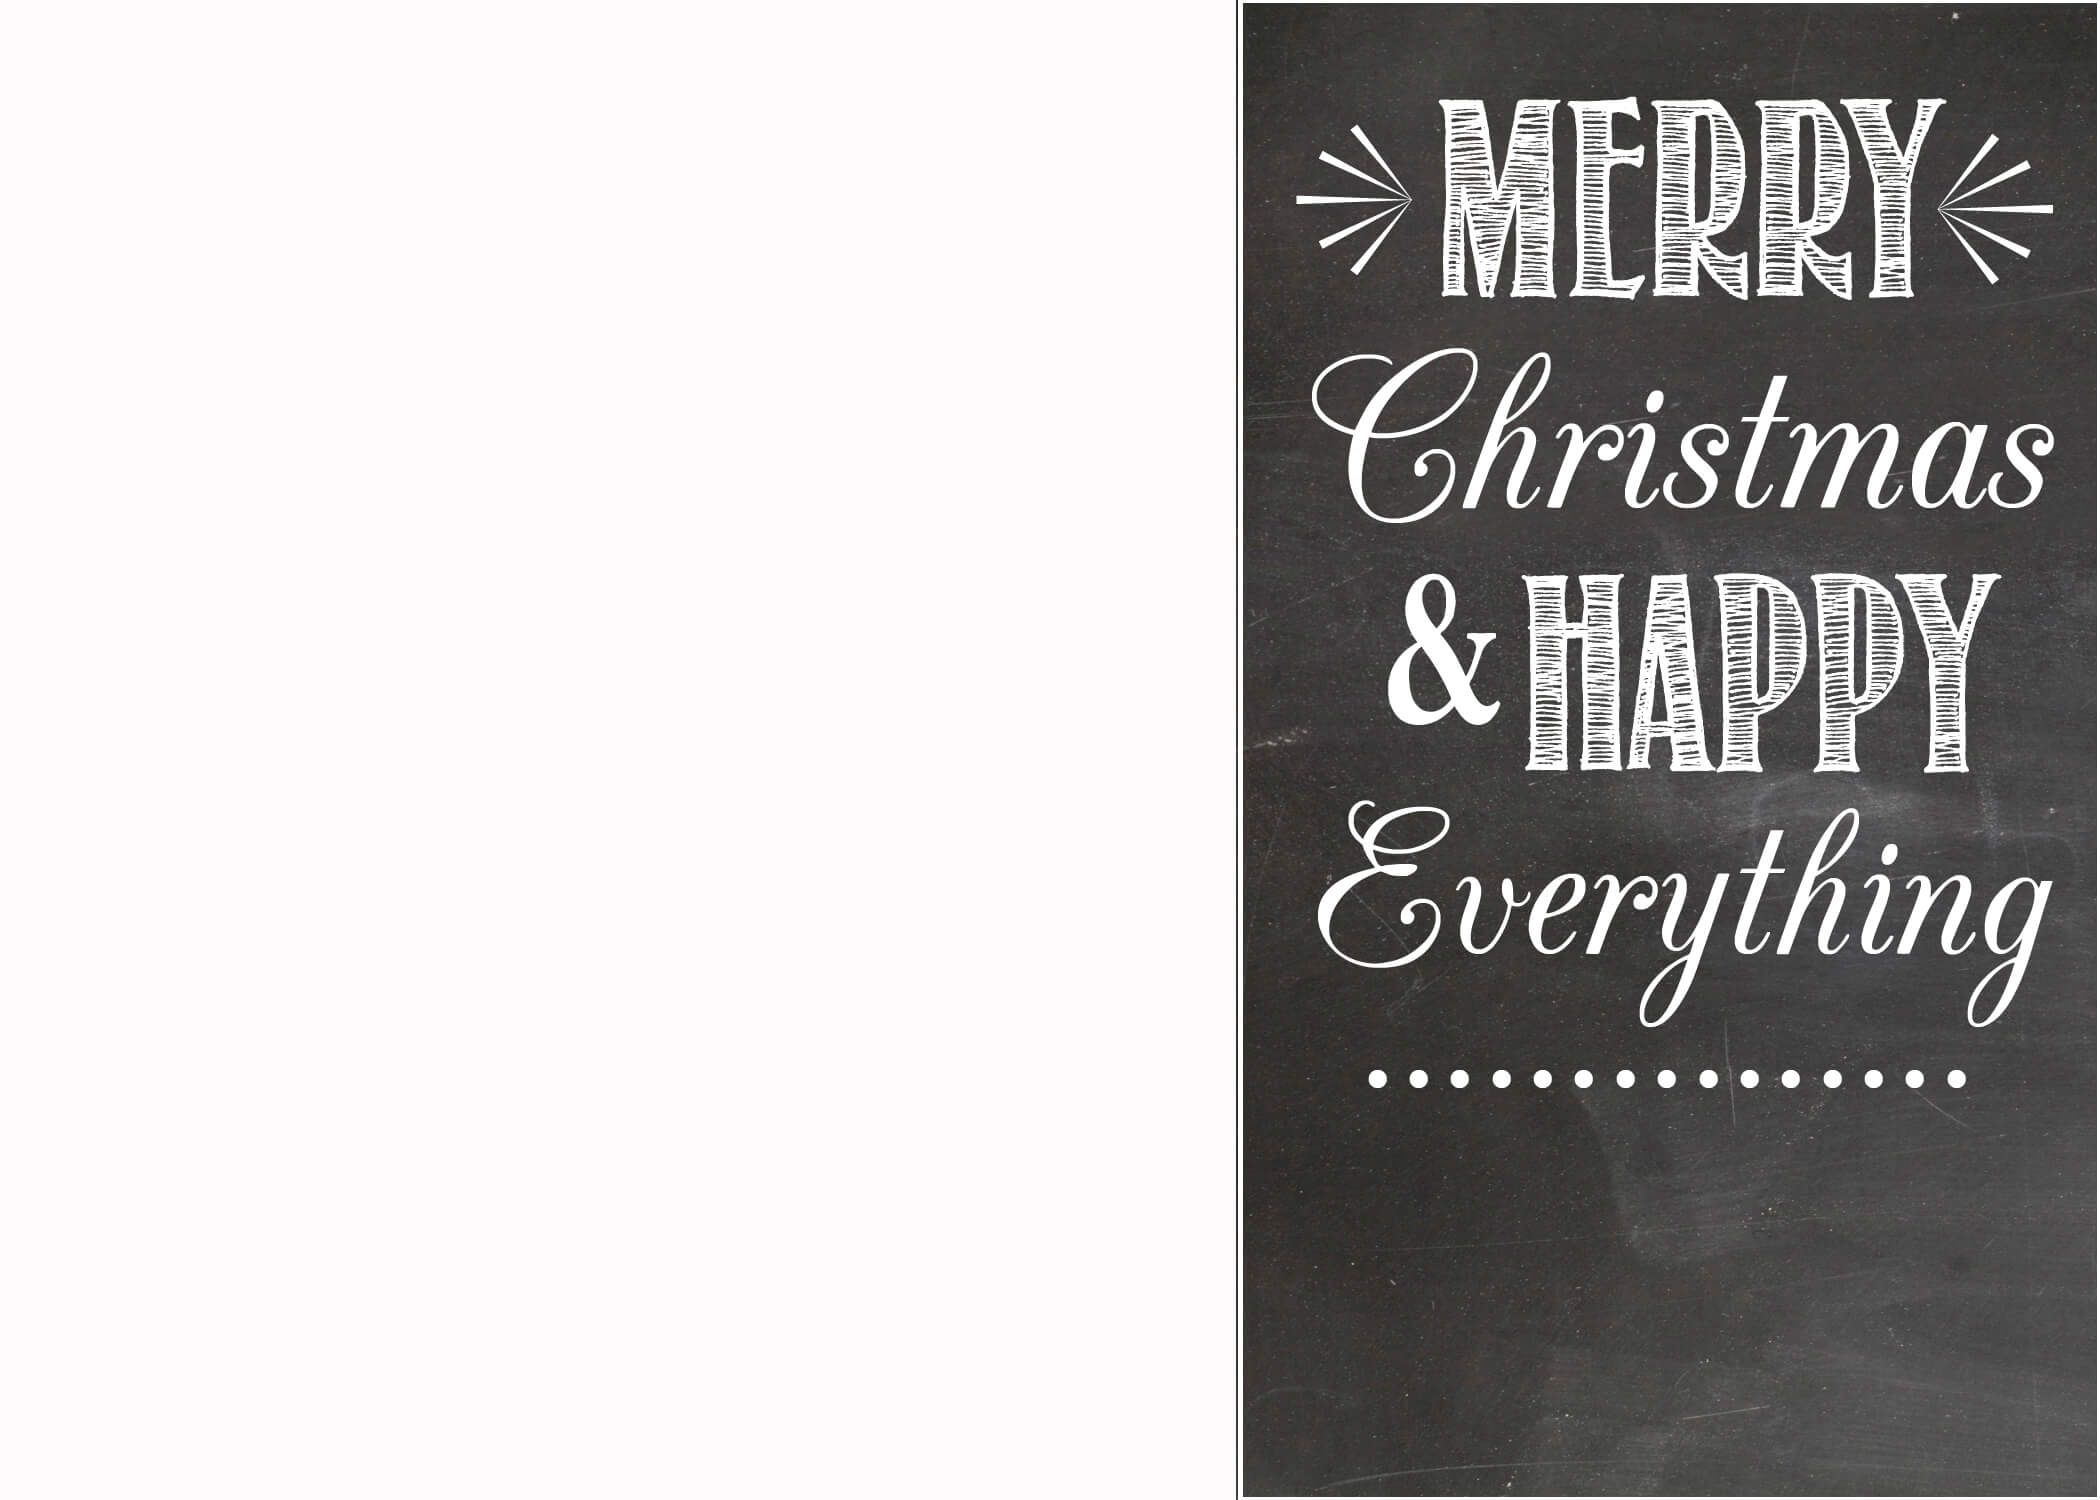 Free Chalkboard Christmas Card Templates | Oldsaltfarm Throughout Free Holiday Photo Card Templates